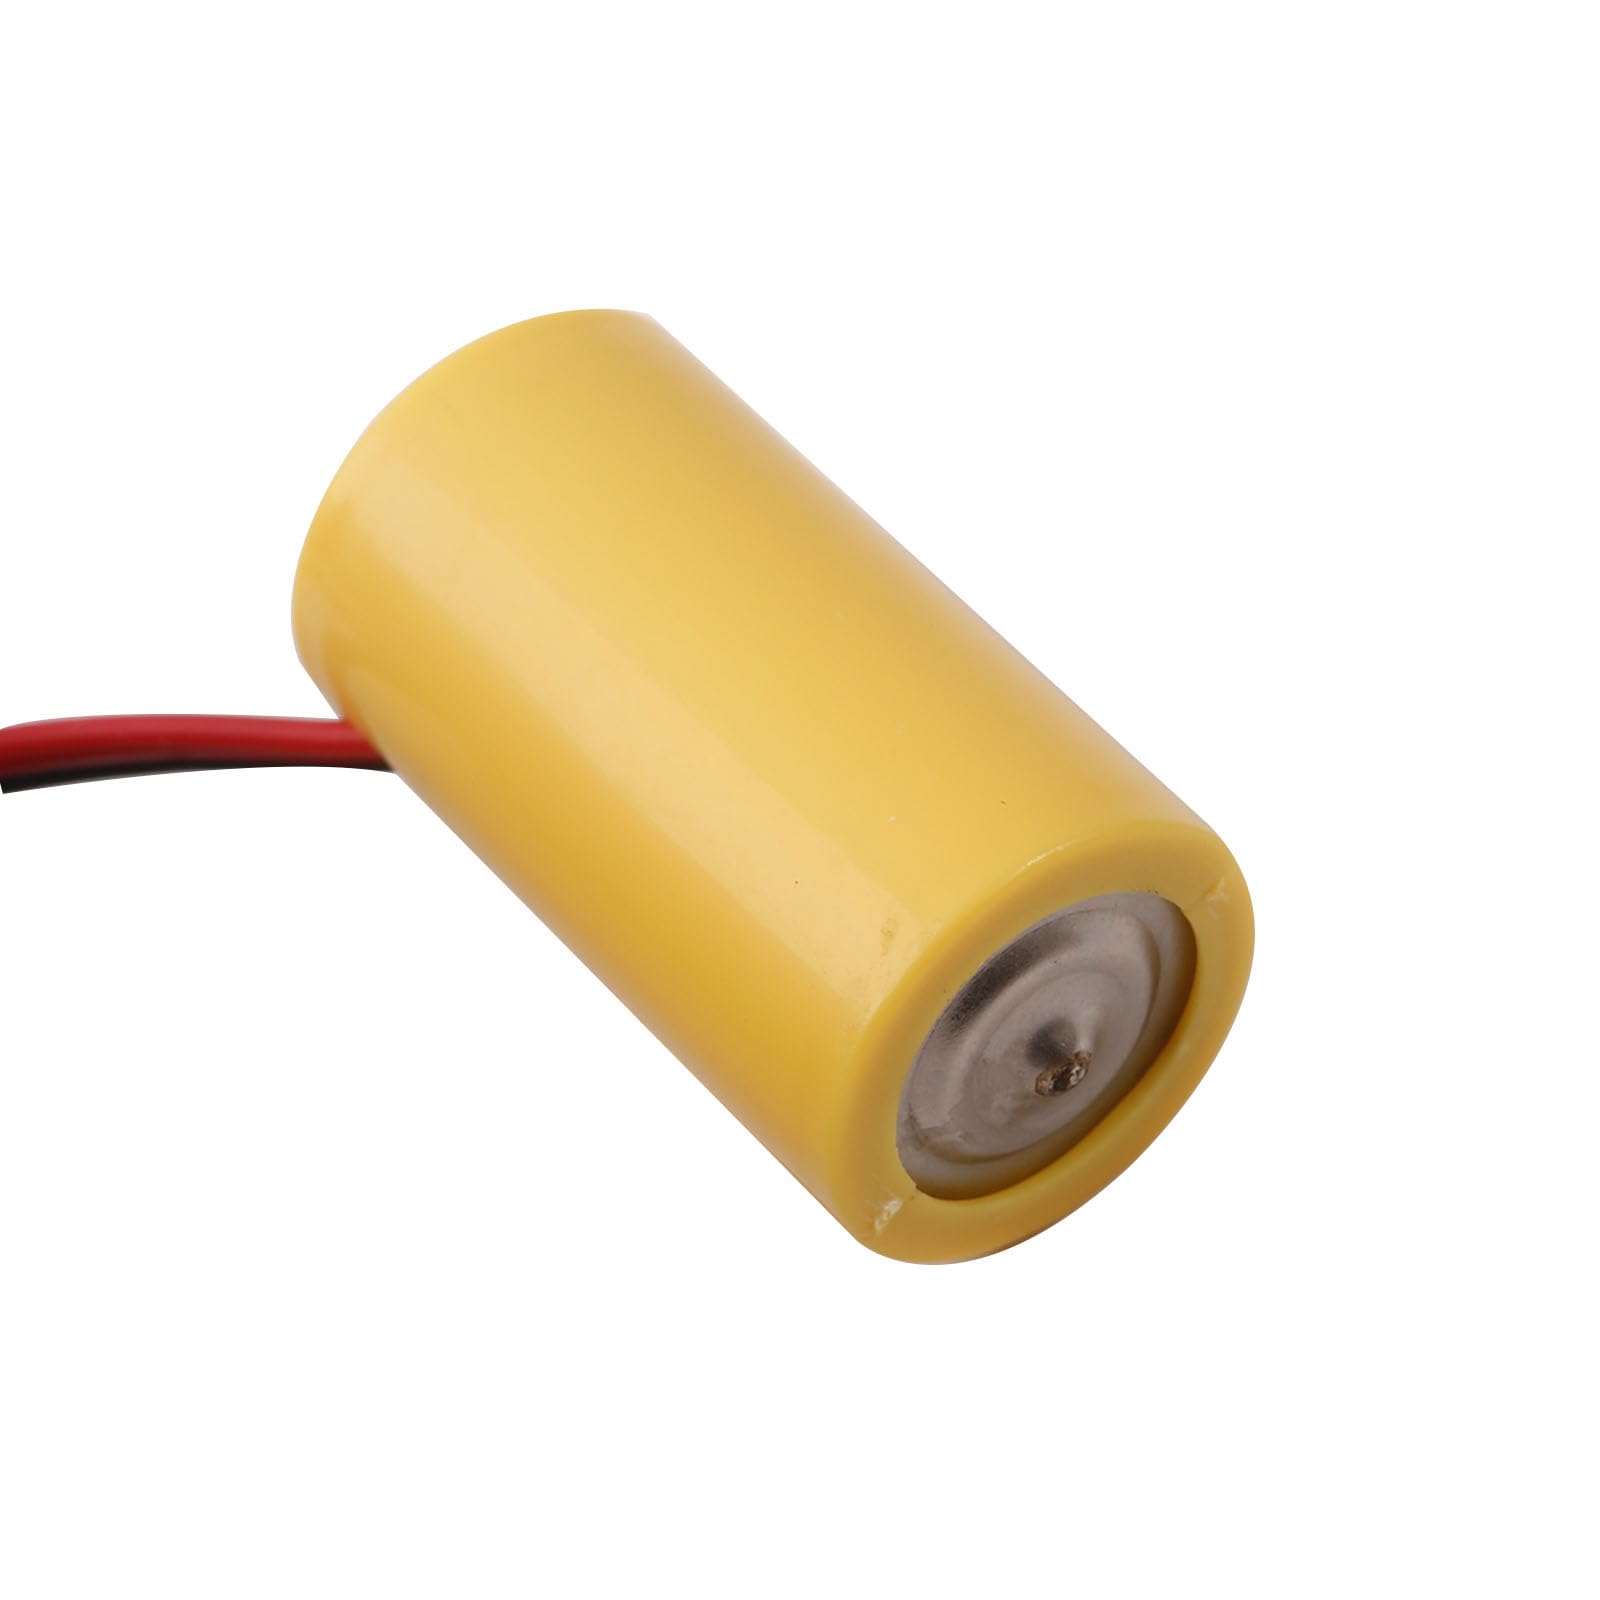 Acinkeety Universal 3V C Size Battery Eliminators Power Supply Cable to 2Pcs 1.5V LR14 C Battery for LED Light Remote Control C Battery